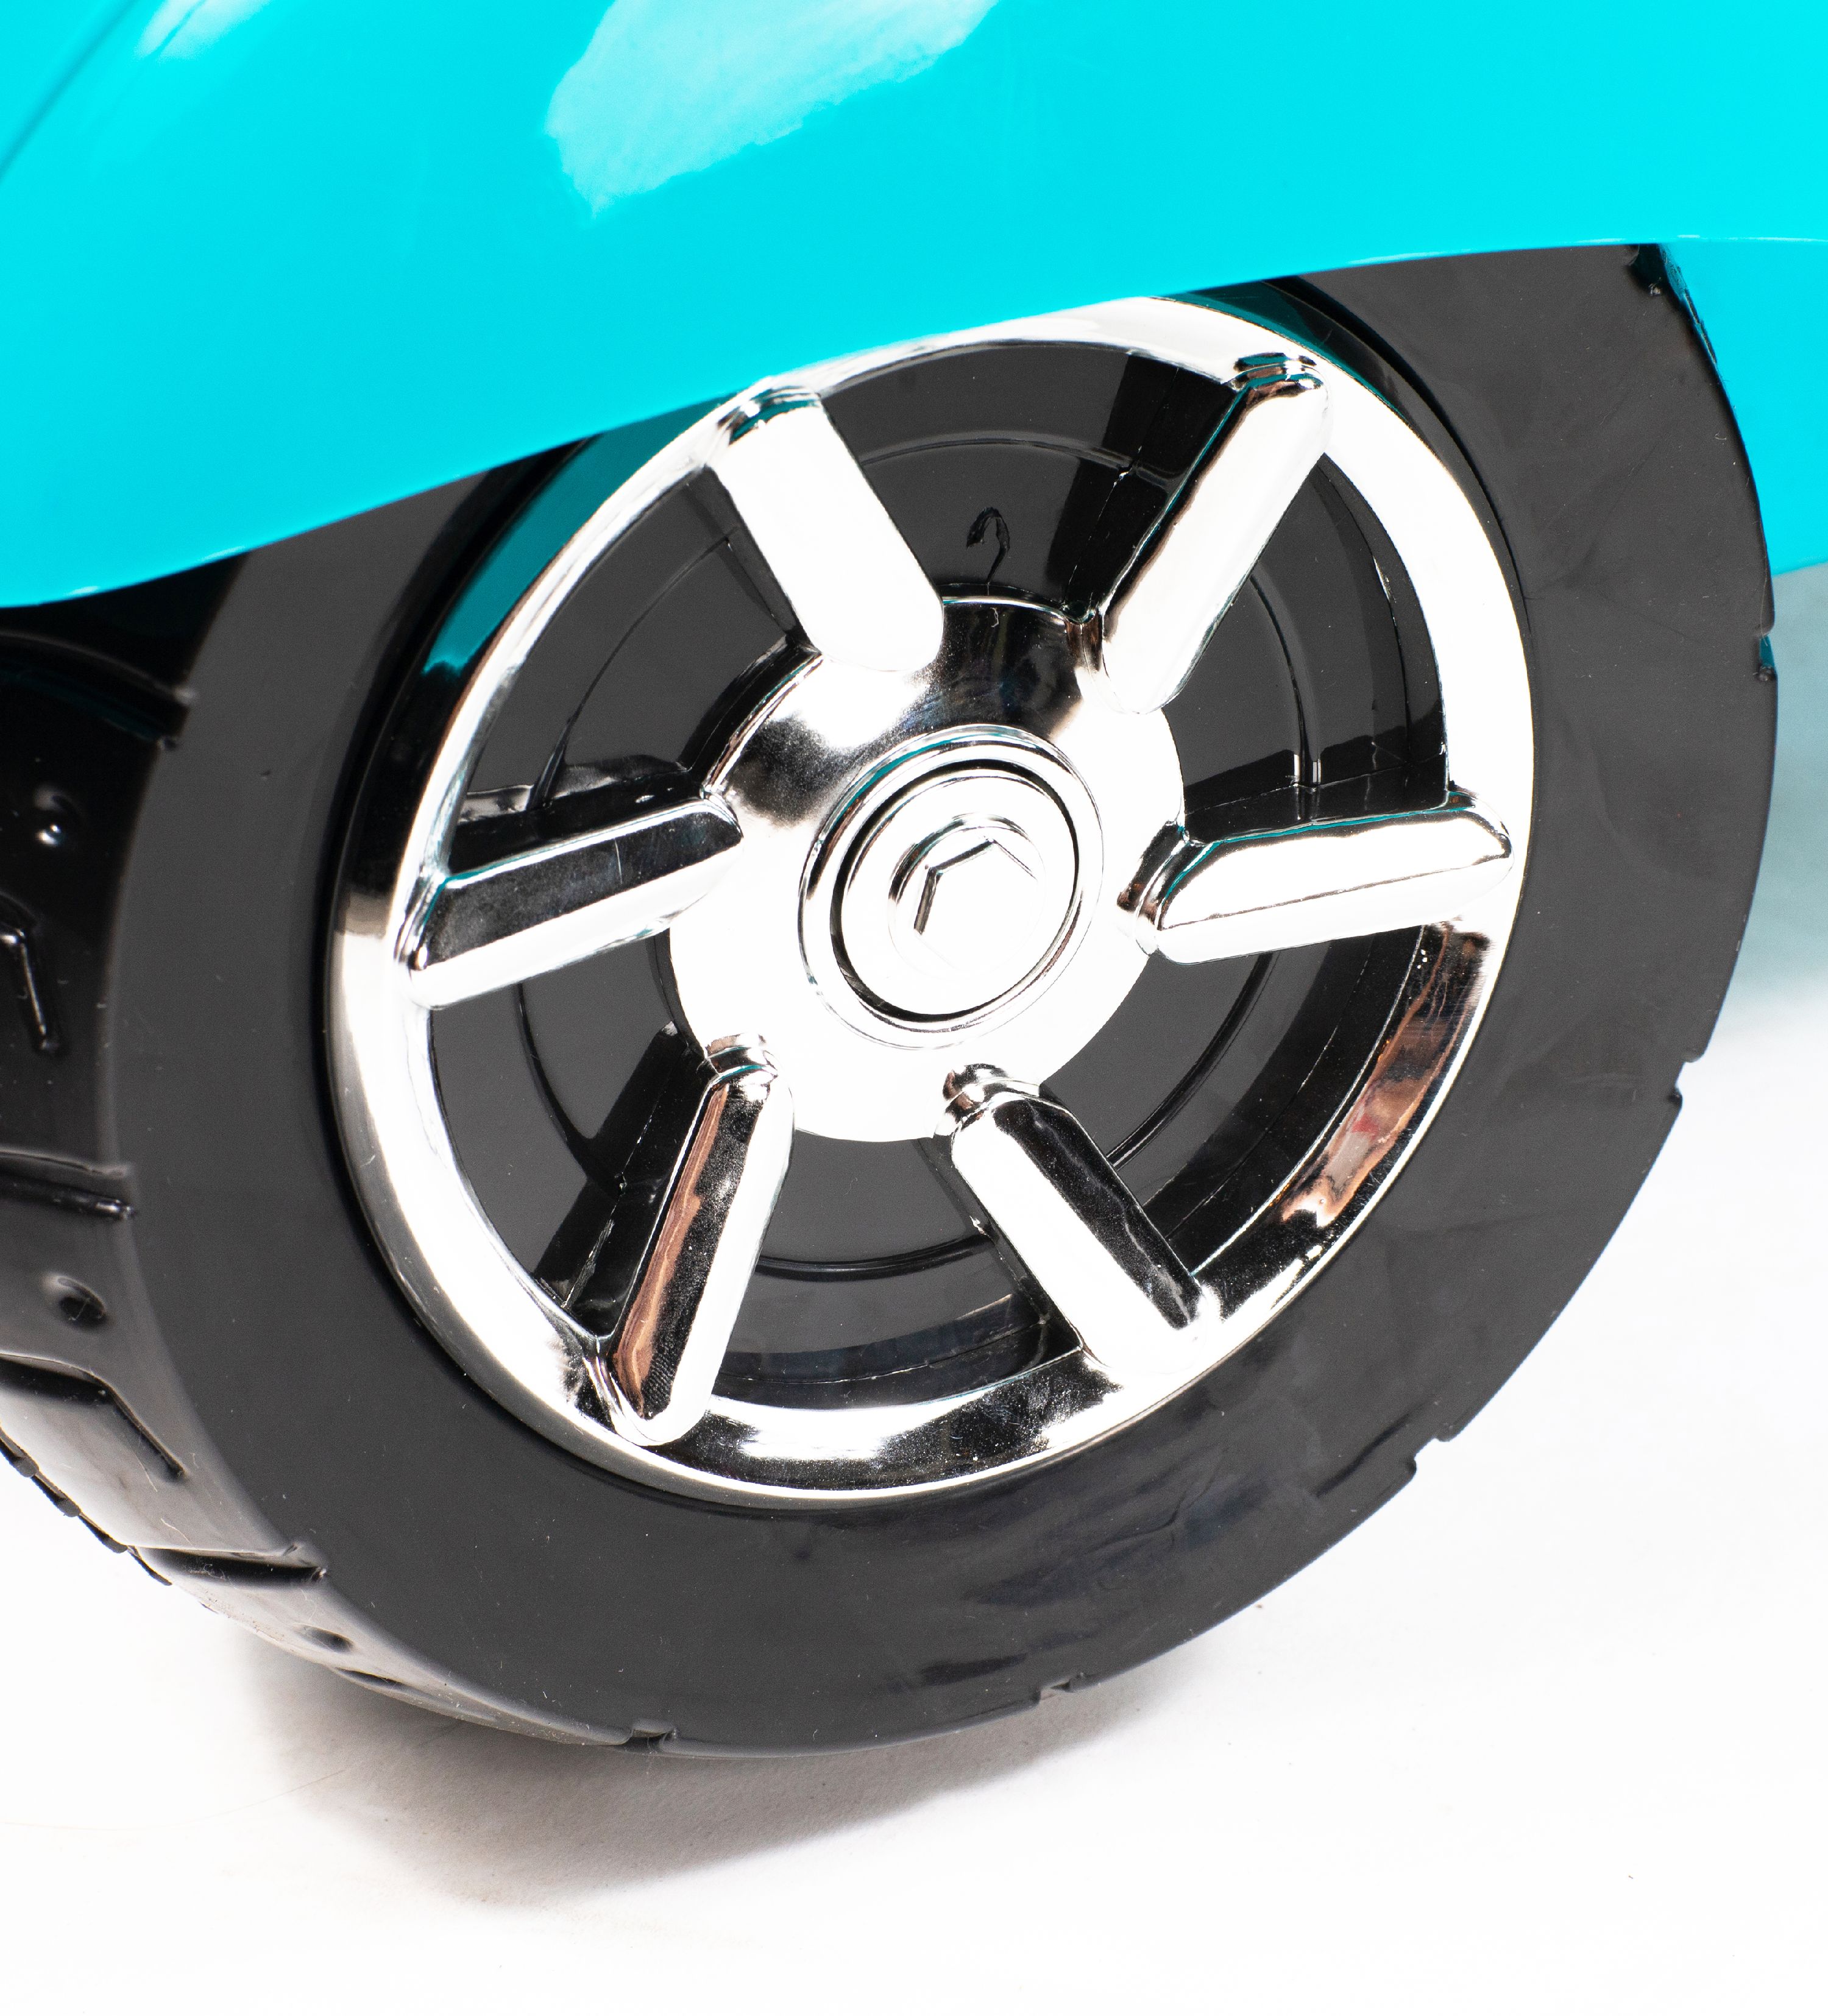 6 Volt Honda Metropolitan Blue Battery Powered Ride-On - image 4 of 8